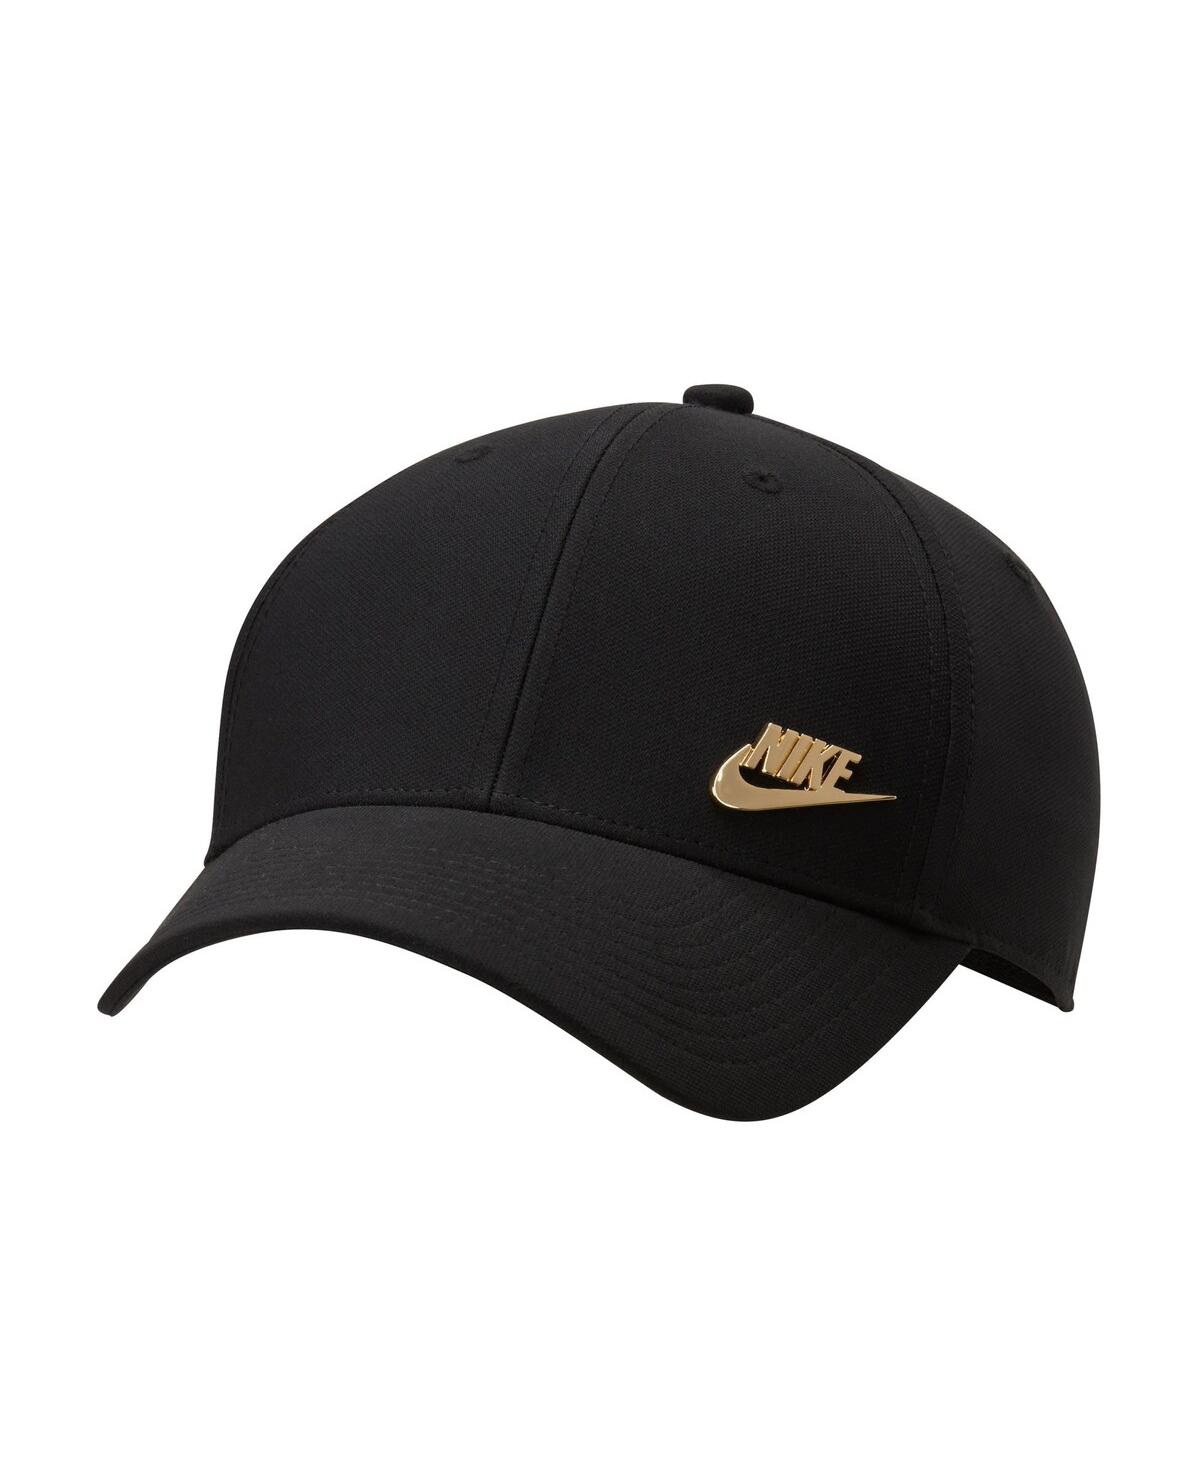 Shop Nike Men's  Black Metal Futura Lifestyle Club Performance Adjustable Hat